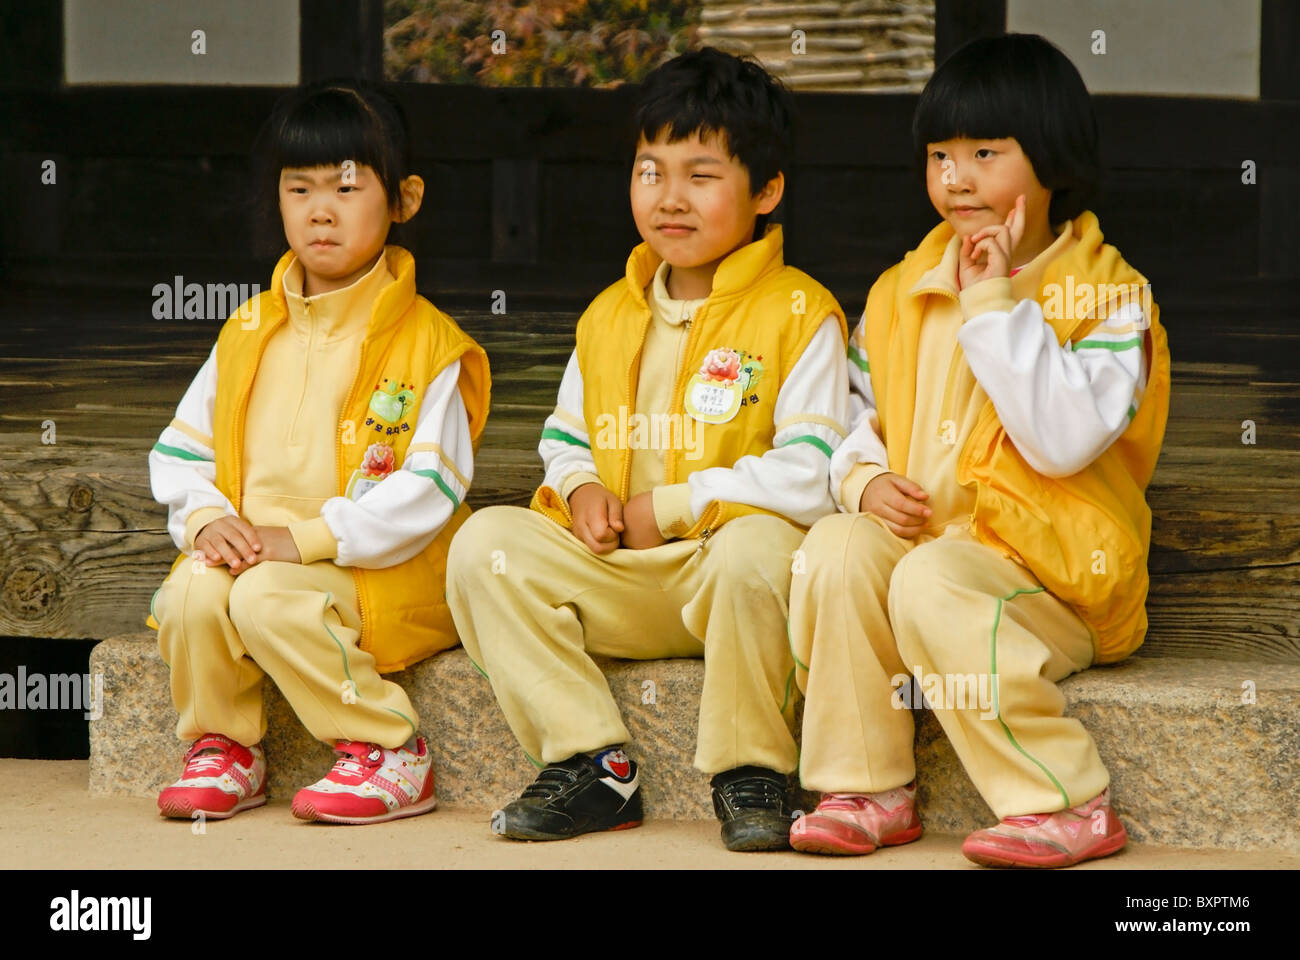 South Korean kids in school uniform Stock Photo